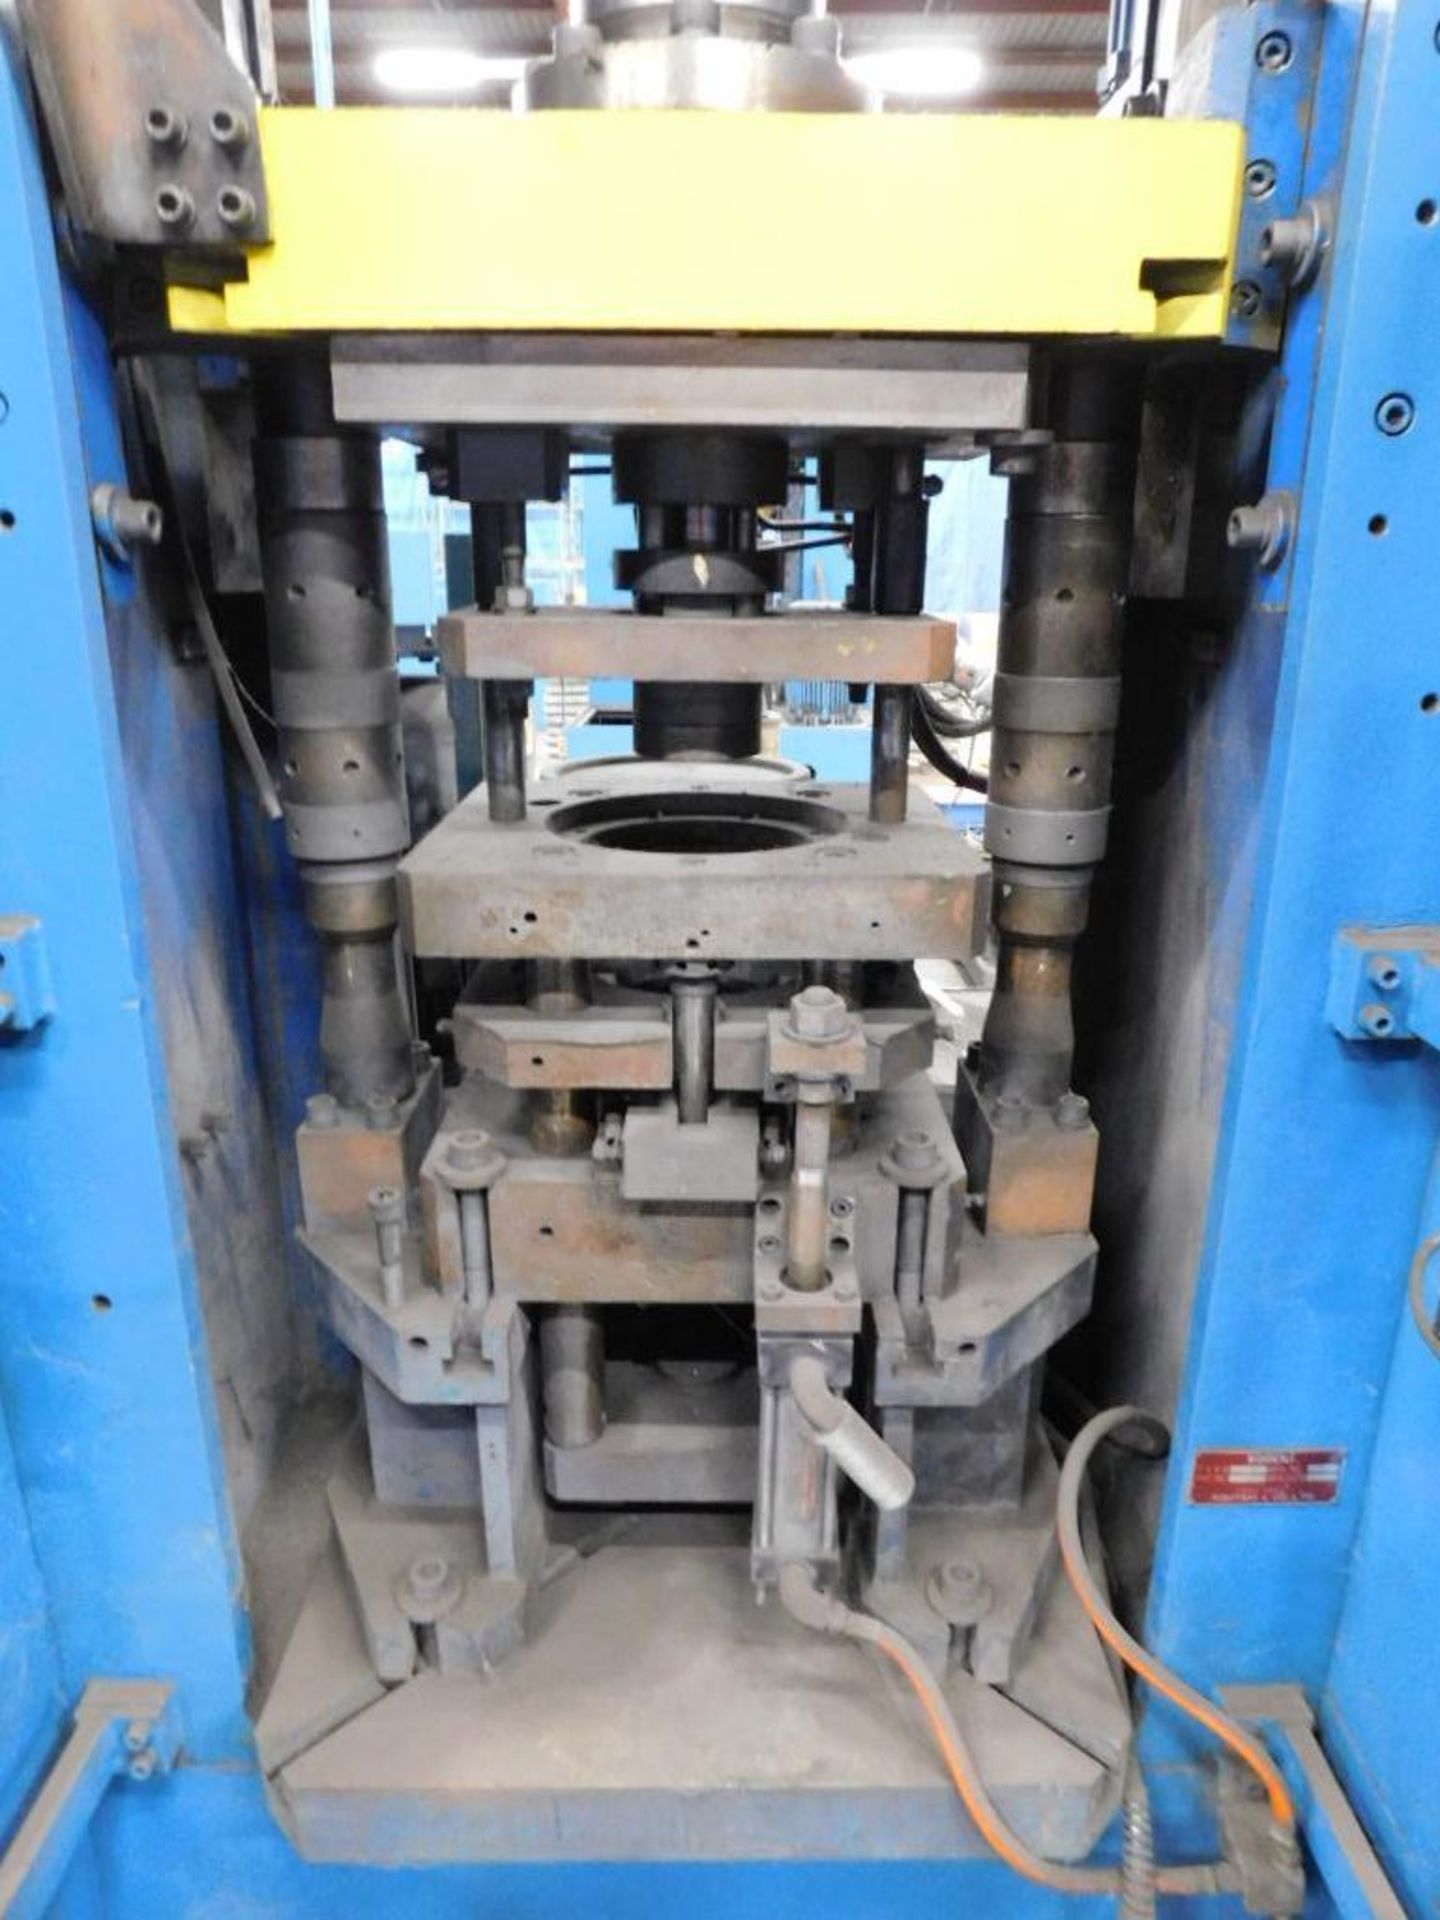 Kotaki Powder Compacting Press, Hydraulic, Model KPH-100, S/N: 2123, 100 Ton Maximum Pressing Force, - Image 8 of 27